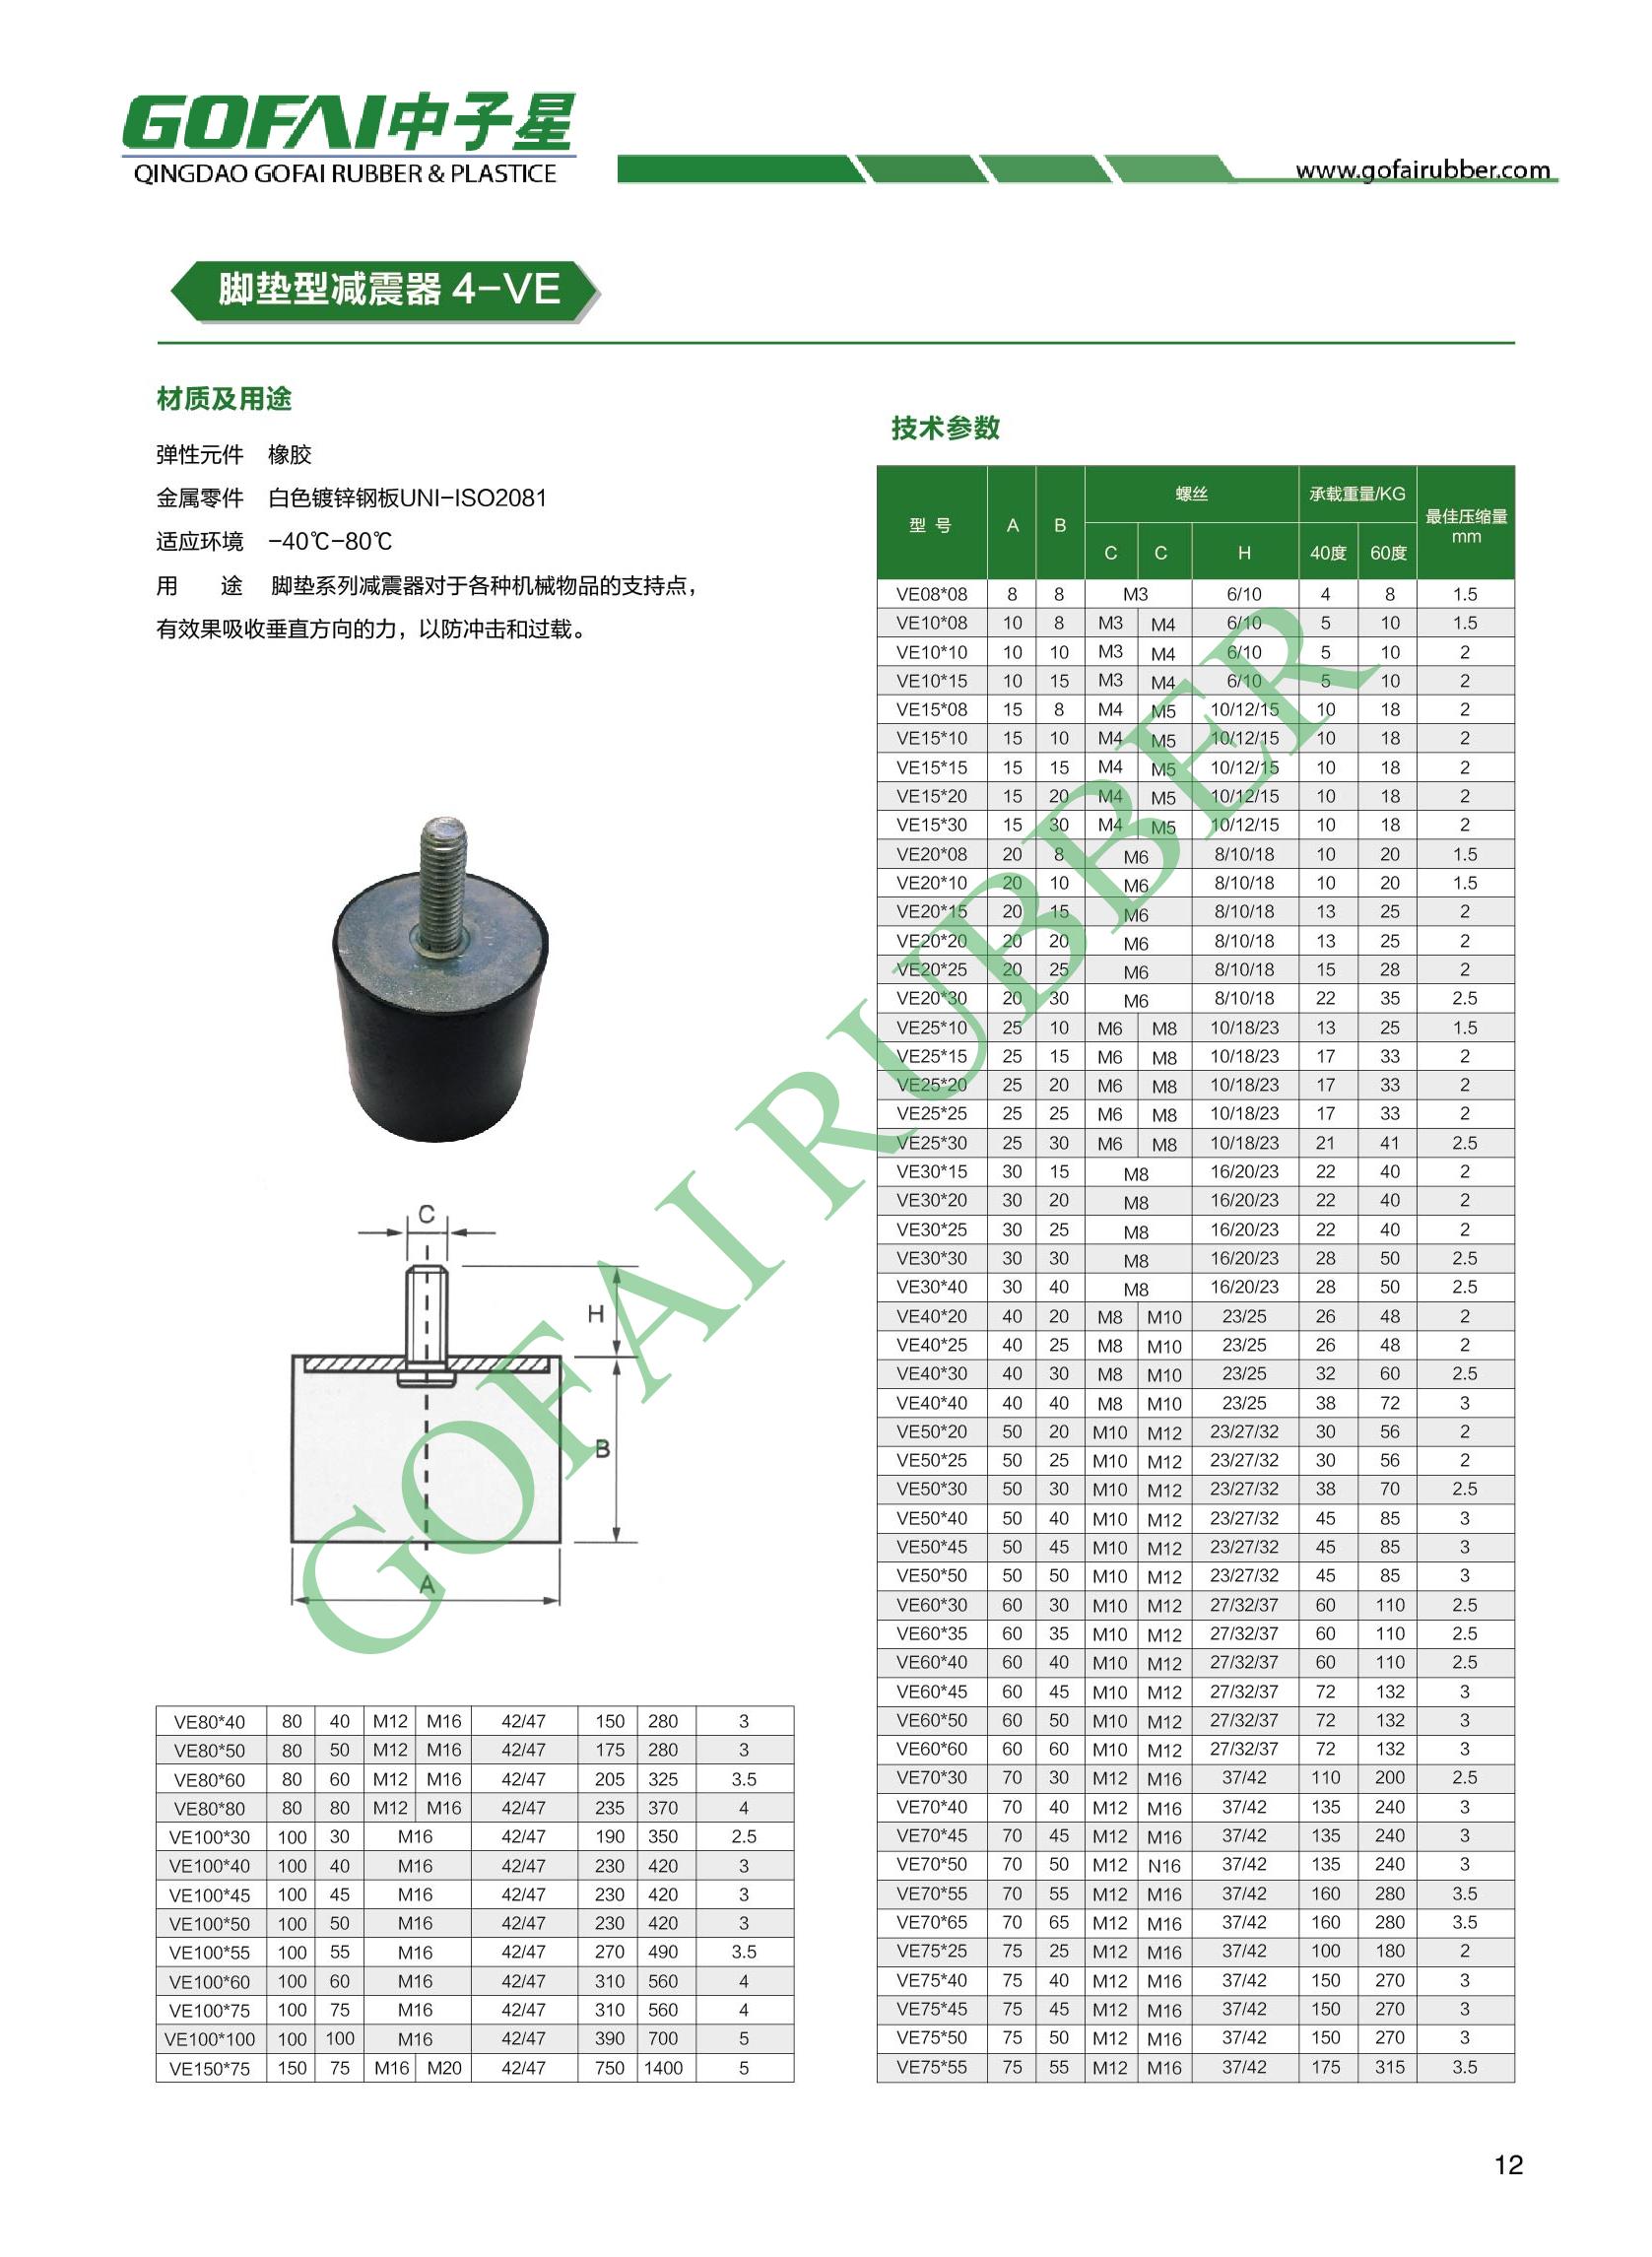 GOFAI catalog for rubber anti-vibration mounts_10.jpg